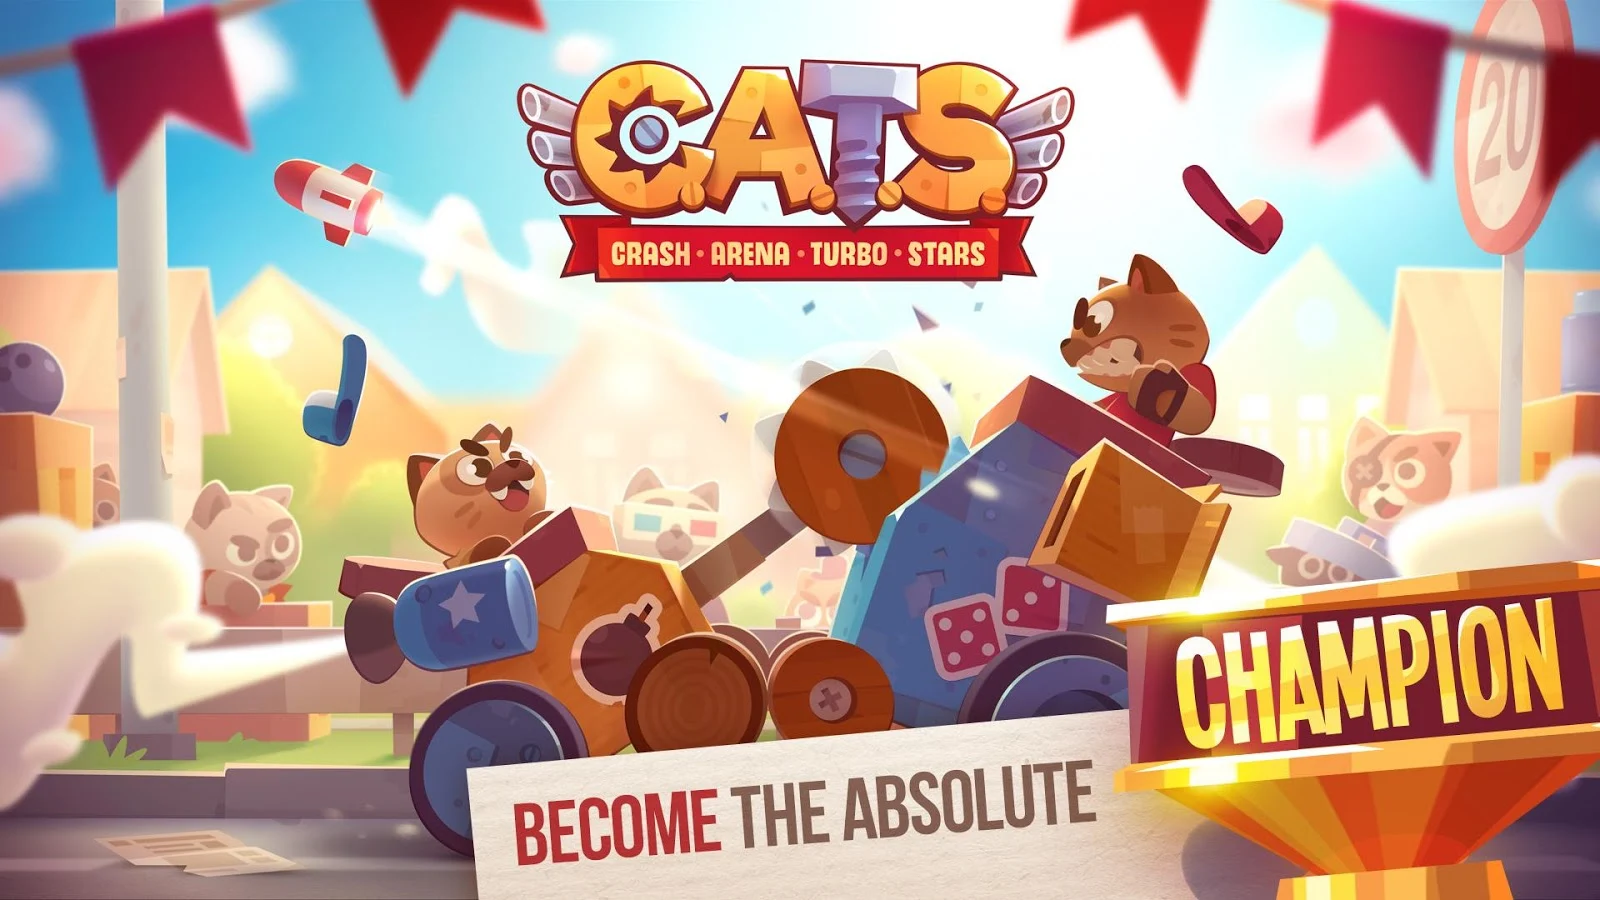 CATS: Crash Arena Turbo Stars Download Apk